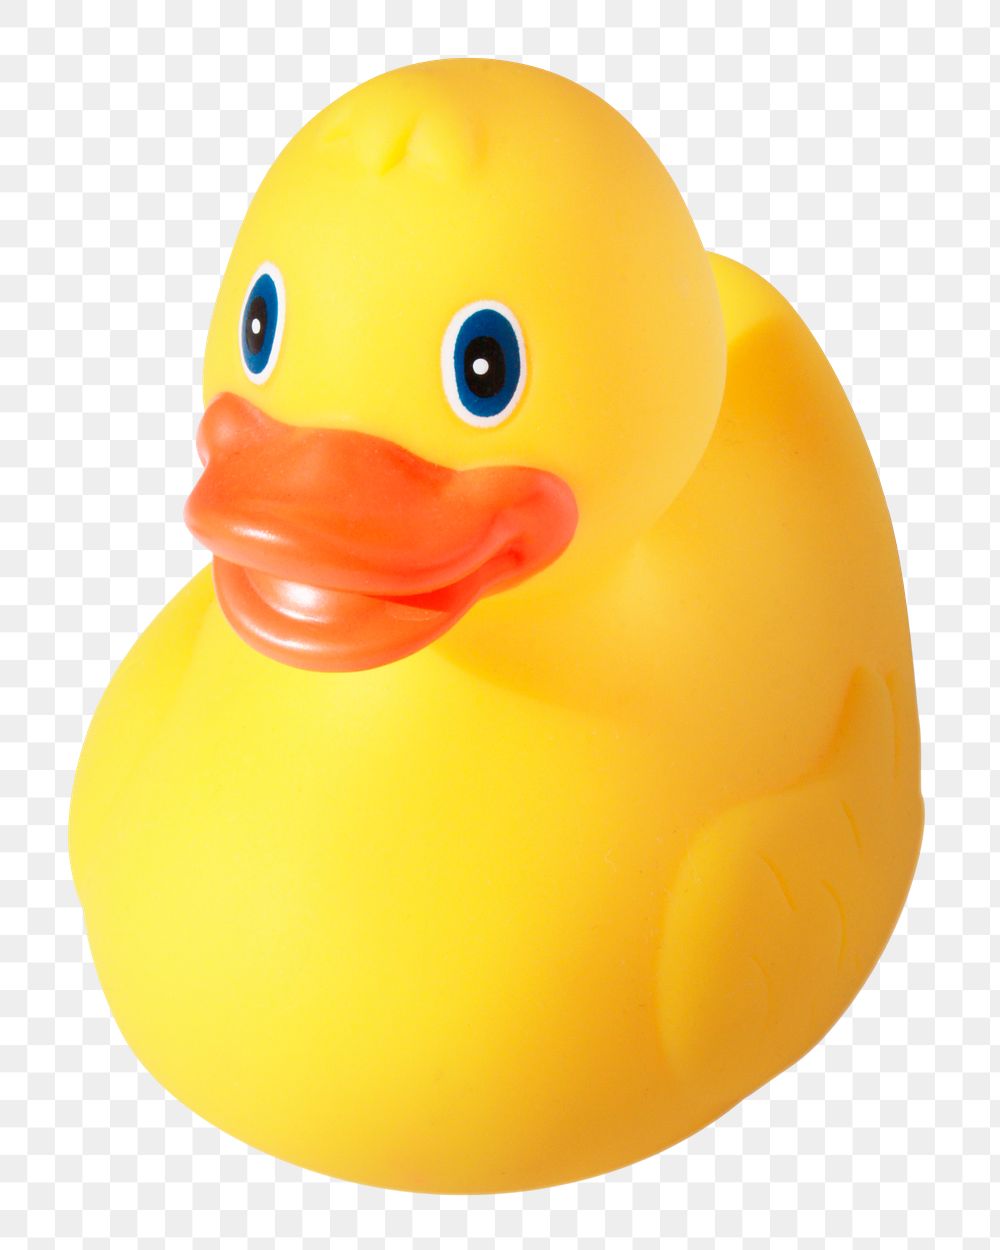 Rubber duck png sticker, transparent background